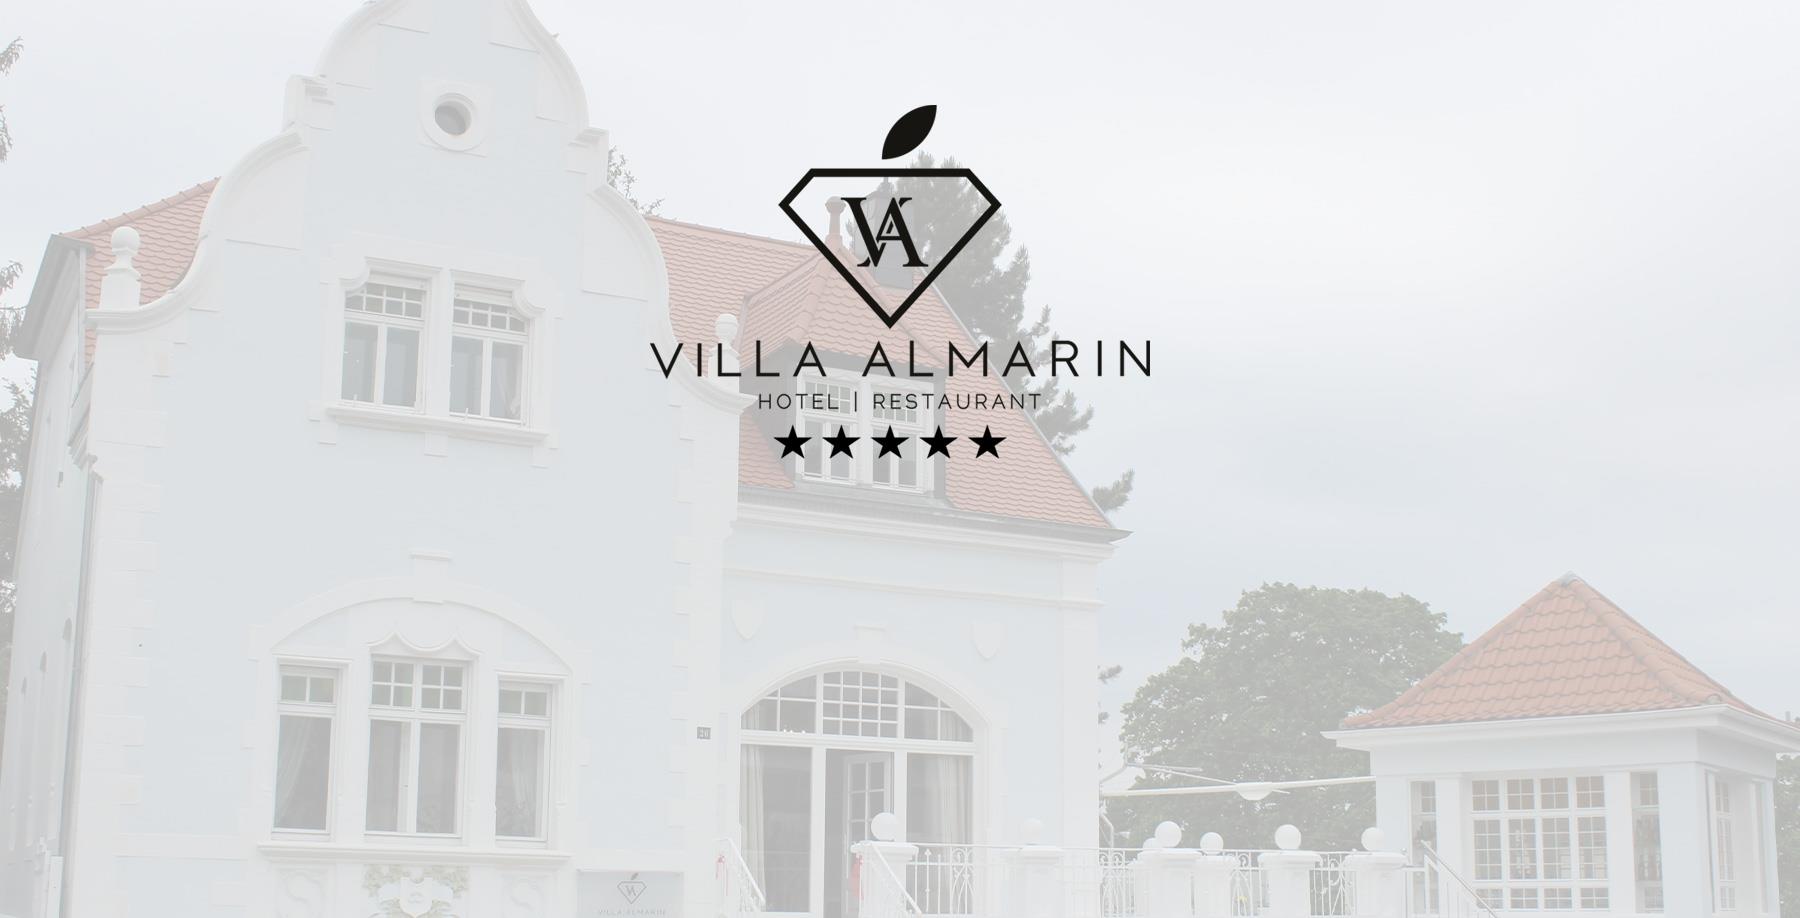 Villa Almarin Hotel - Germany - 1